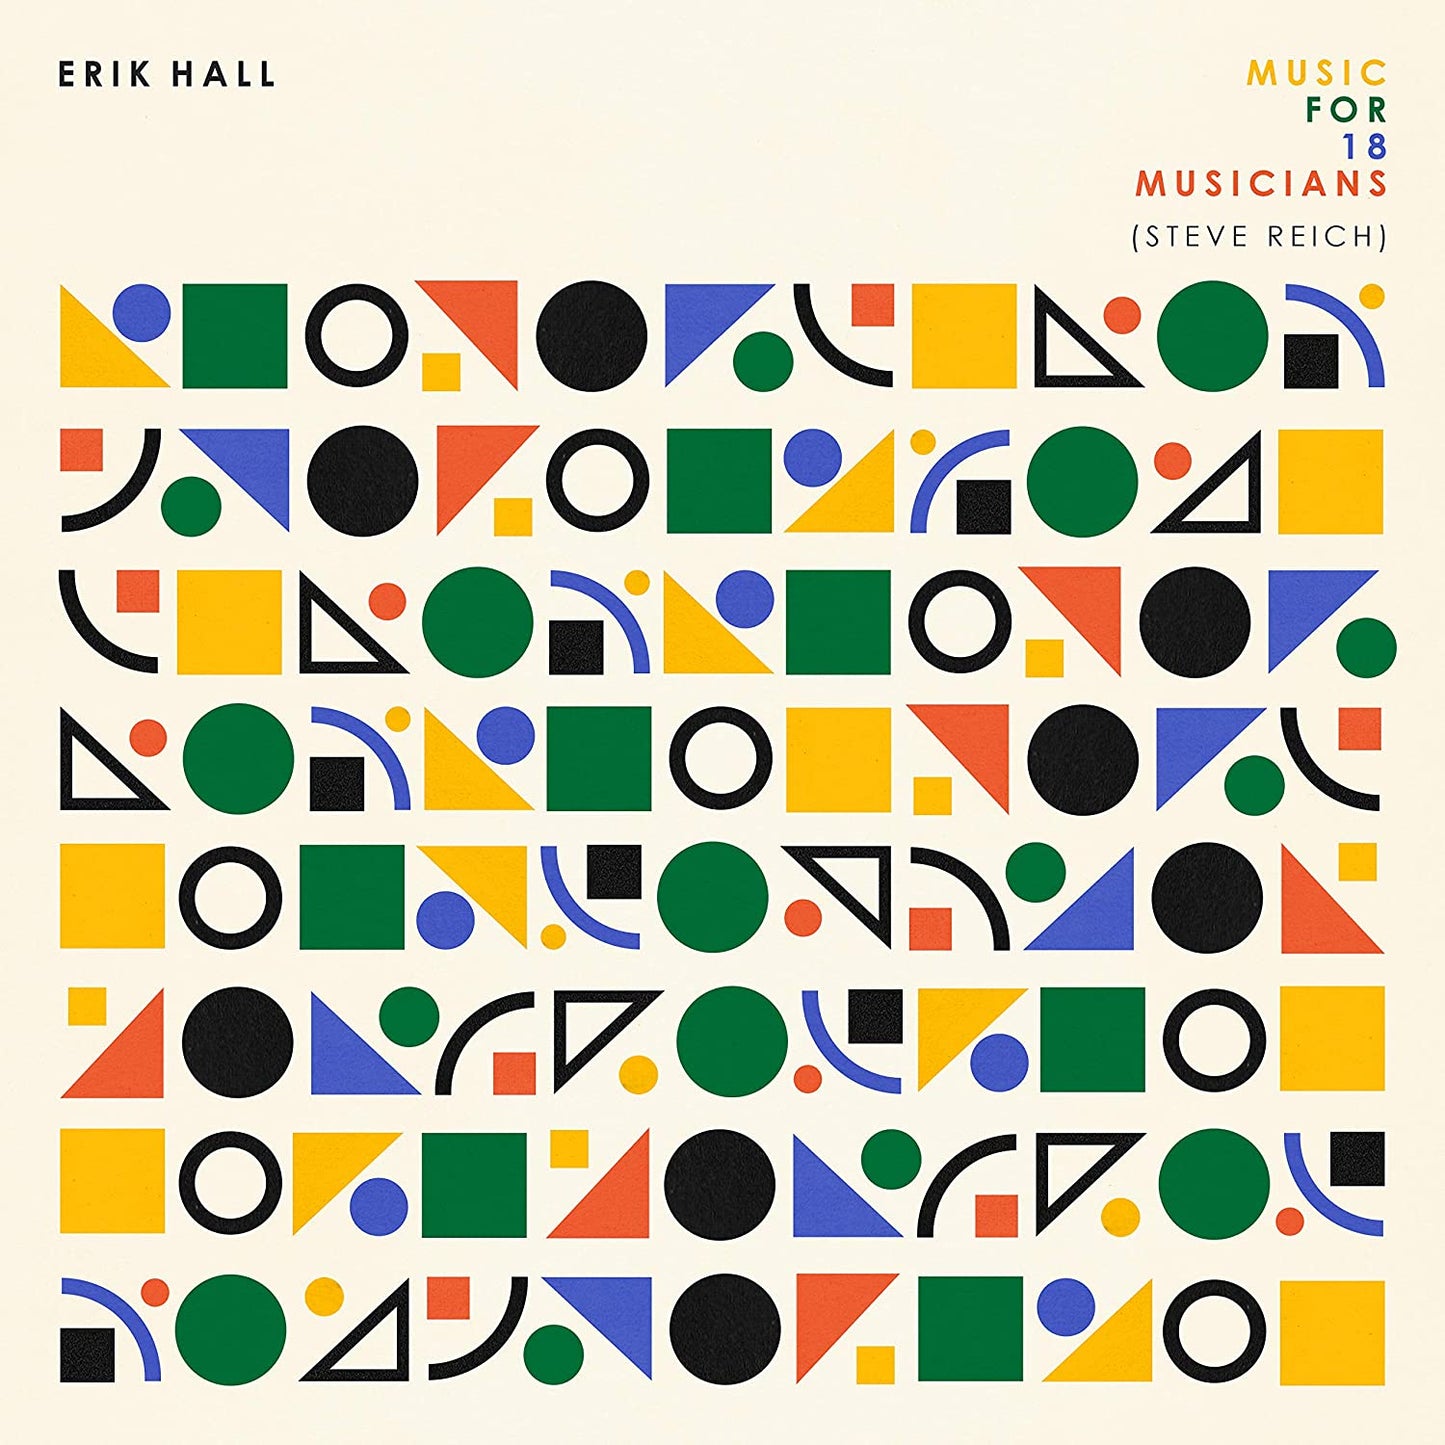 Hall, Erik - Music for 18 Musicians